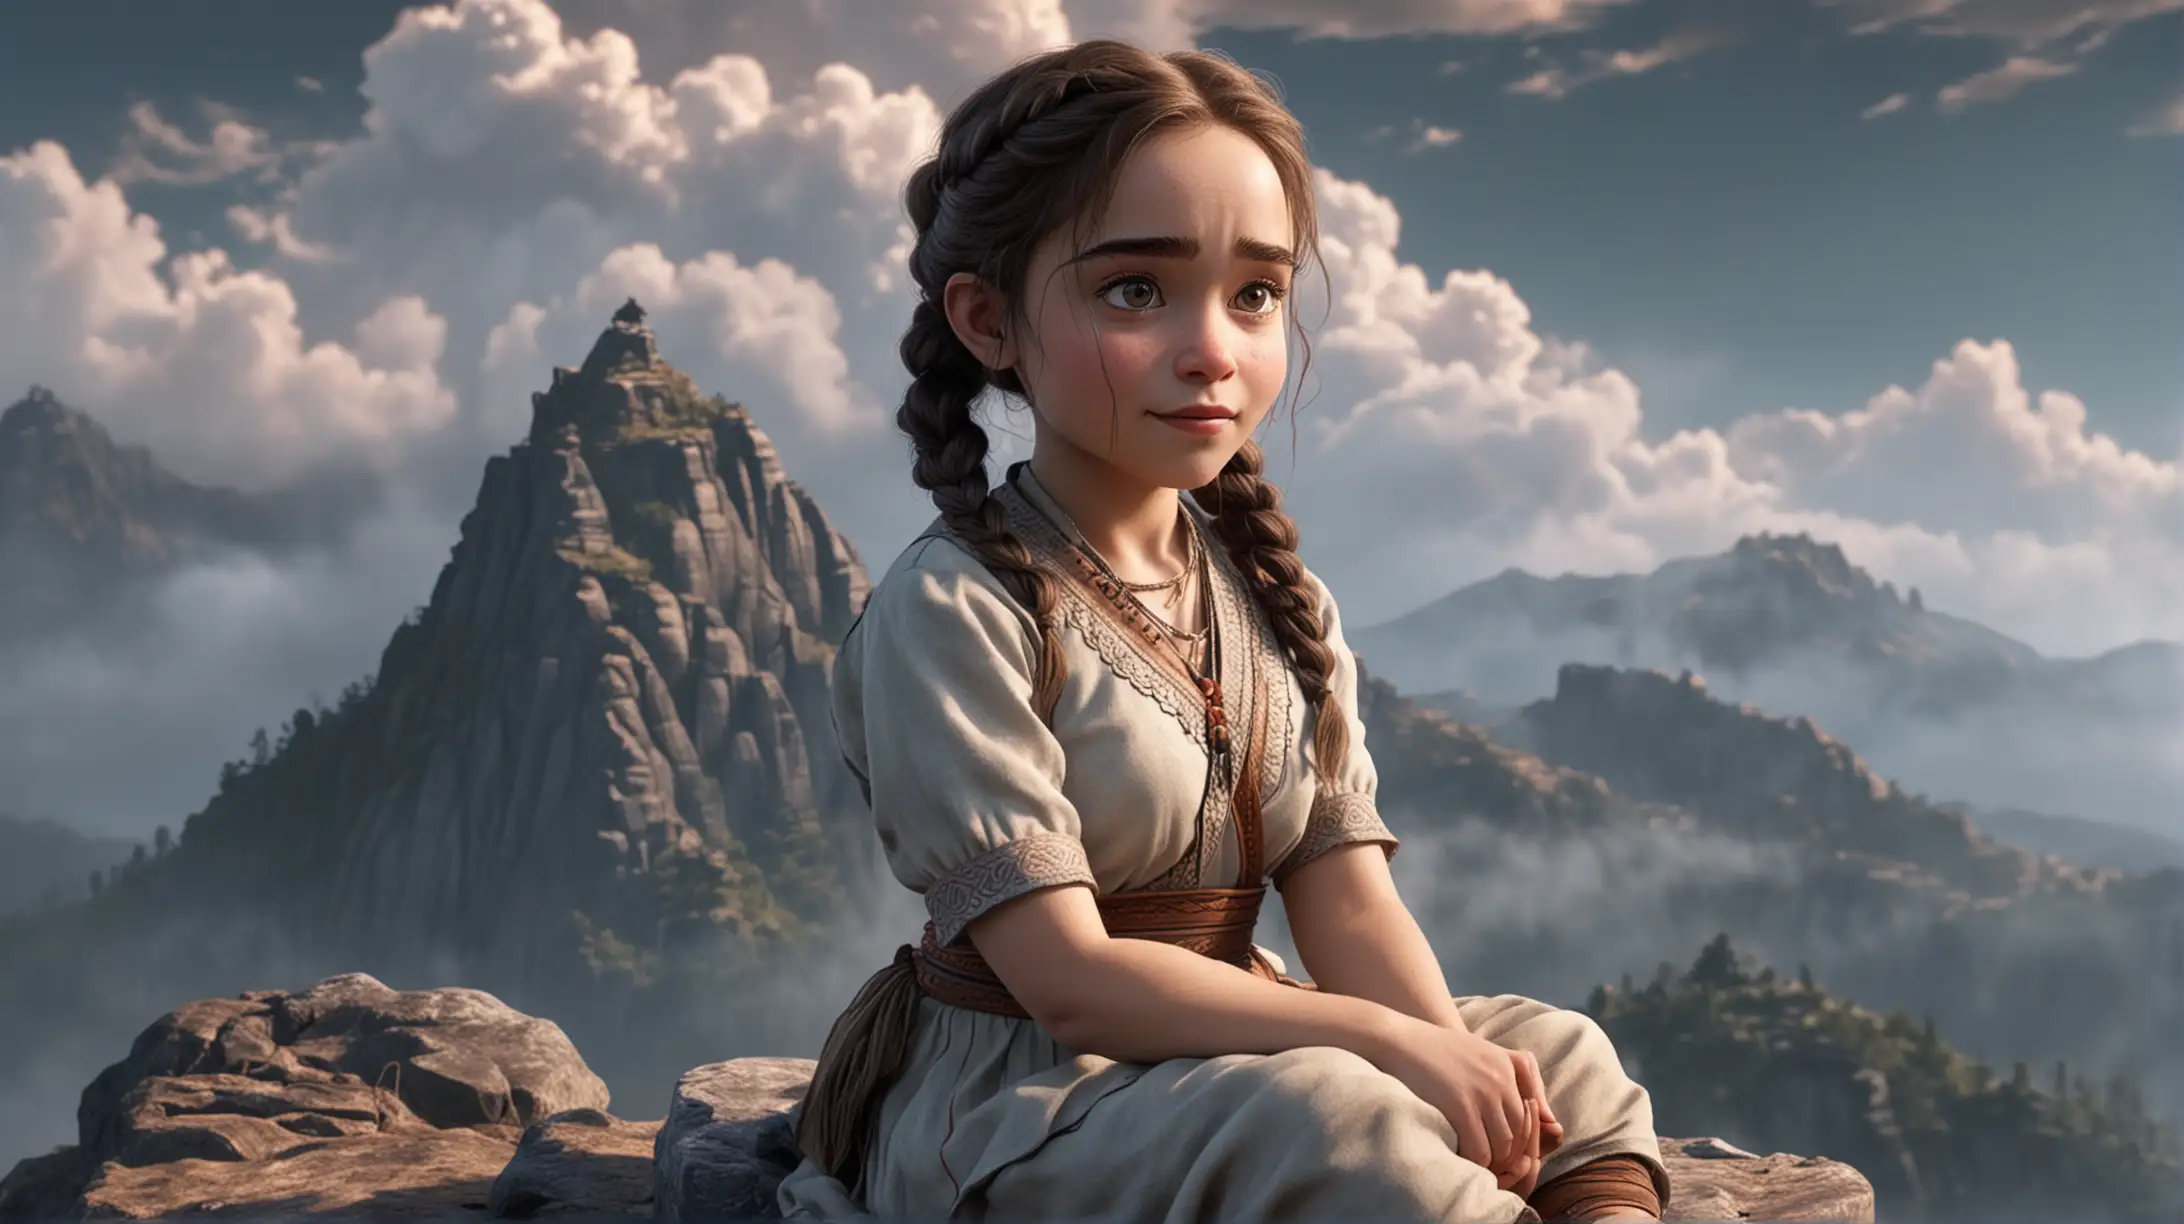 Cartoon Portrait of Emilia Clarke as Indian Girl Sitting atop a Misty Mountain